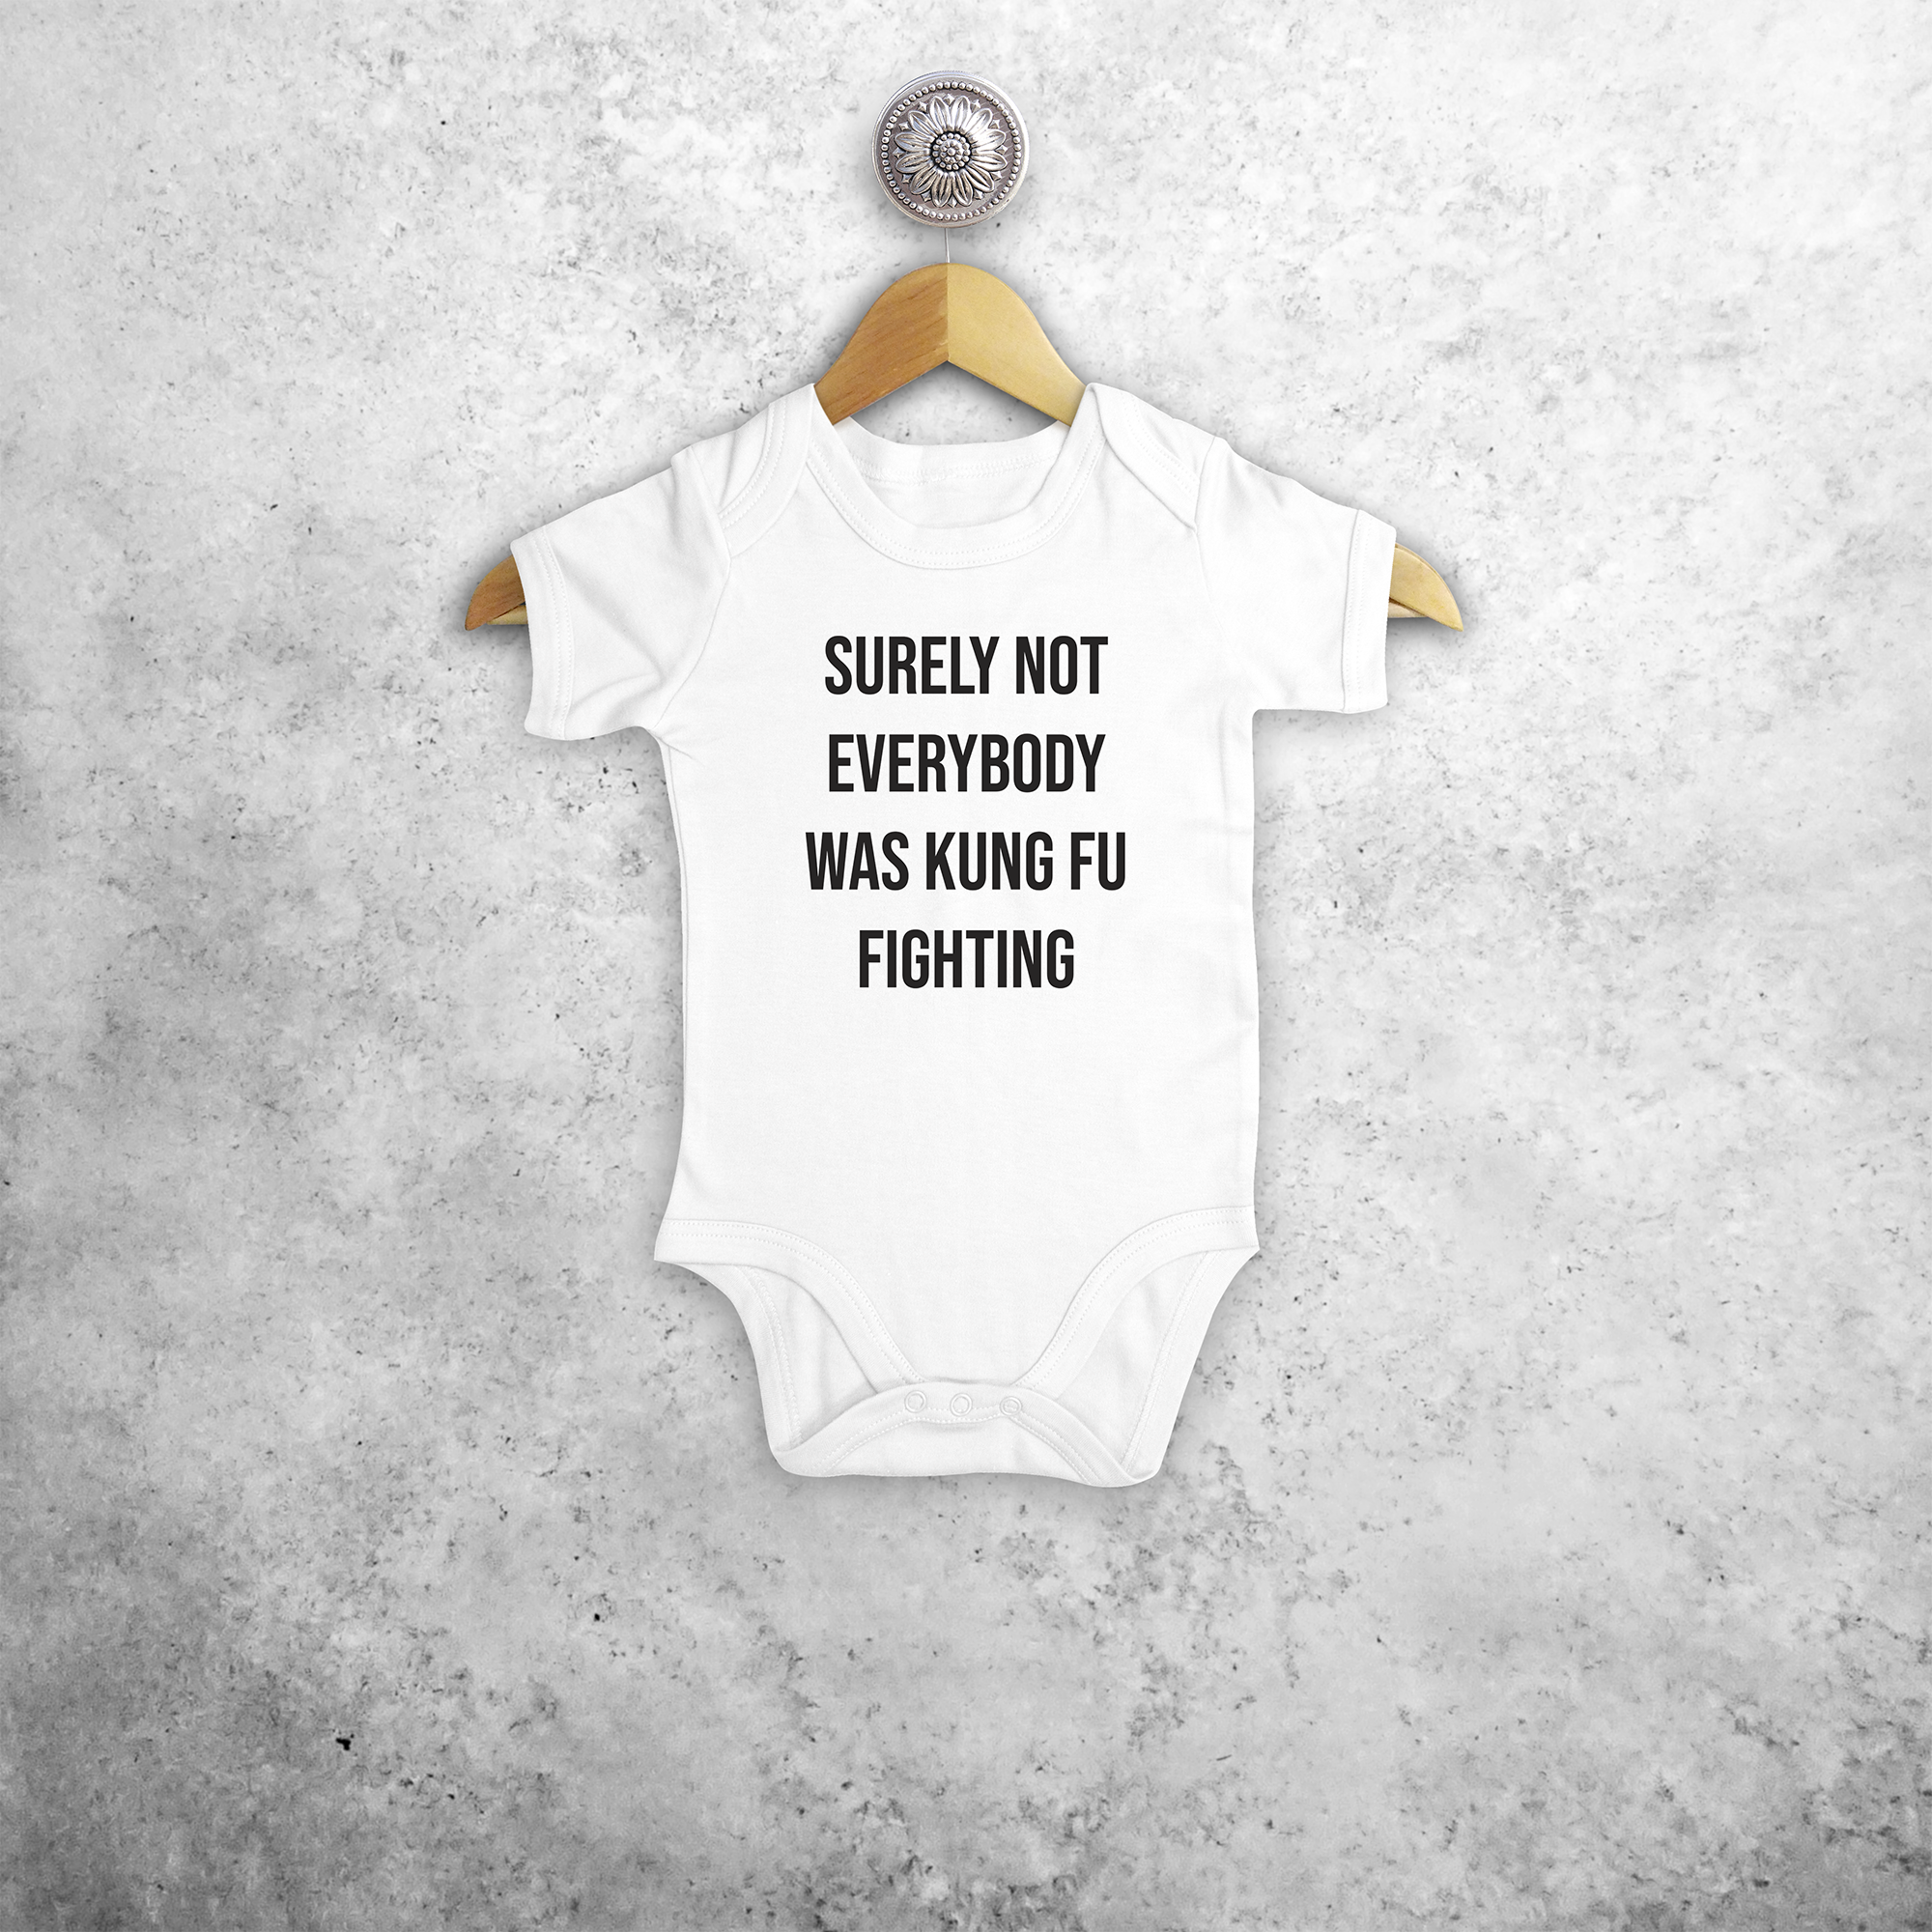 'Surely not everybody was kung fu fighting' baby shortsleeve bodysuit